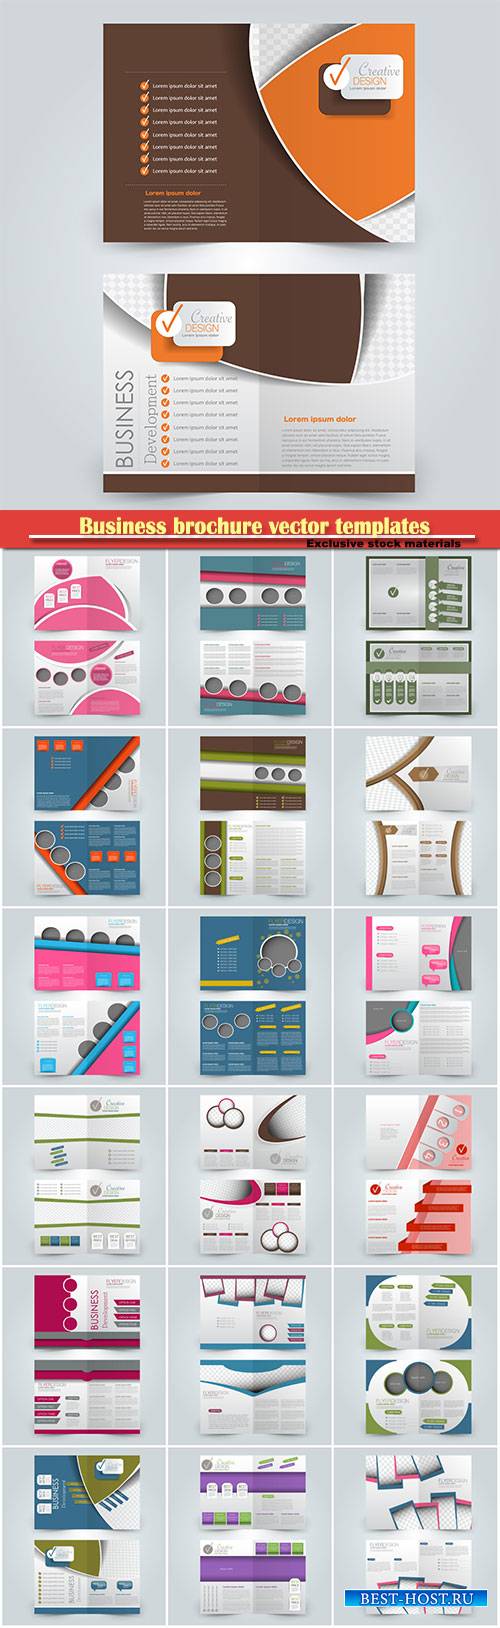 Business brochure vector templates, magazine cover, business mockup, education, presentation, report # 52